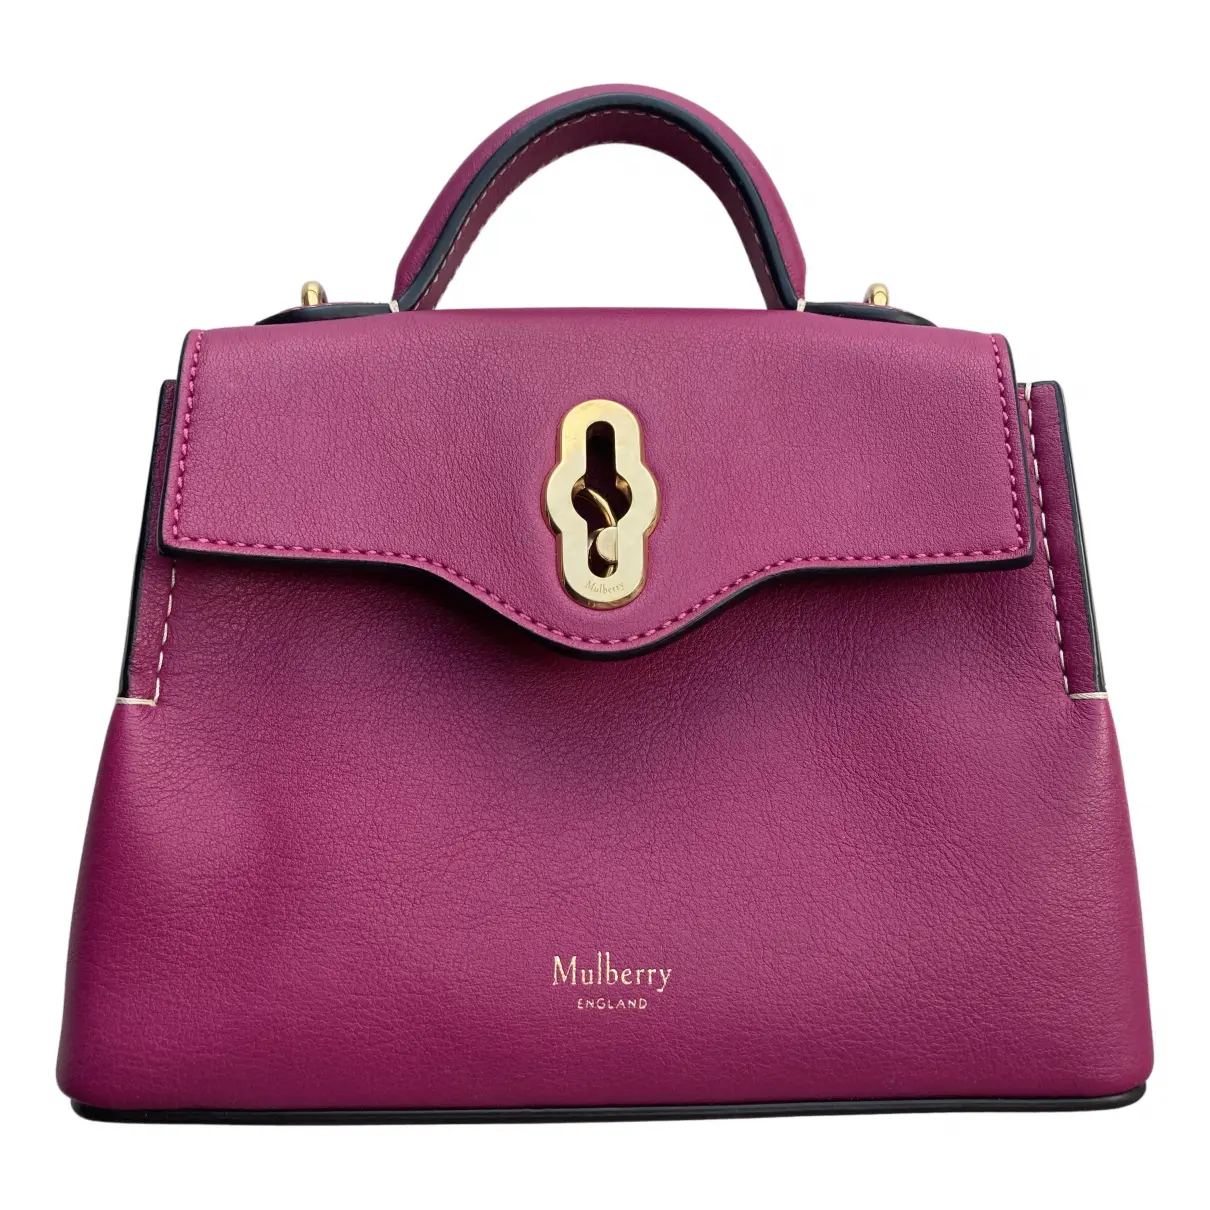 Seaton leather handbag Mulberry